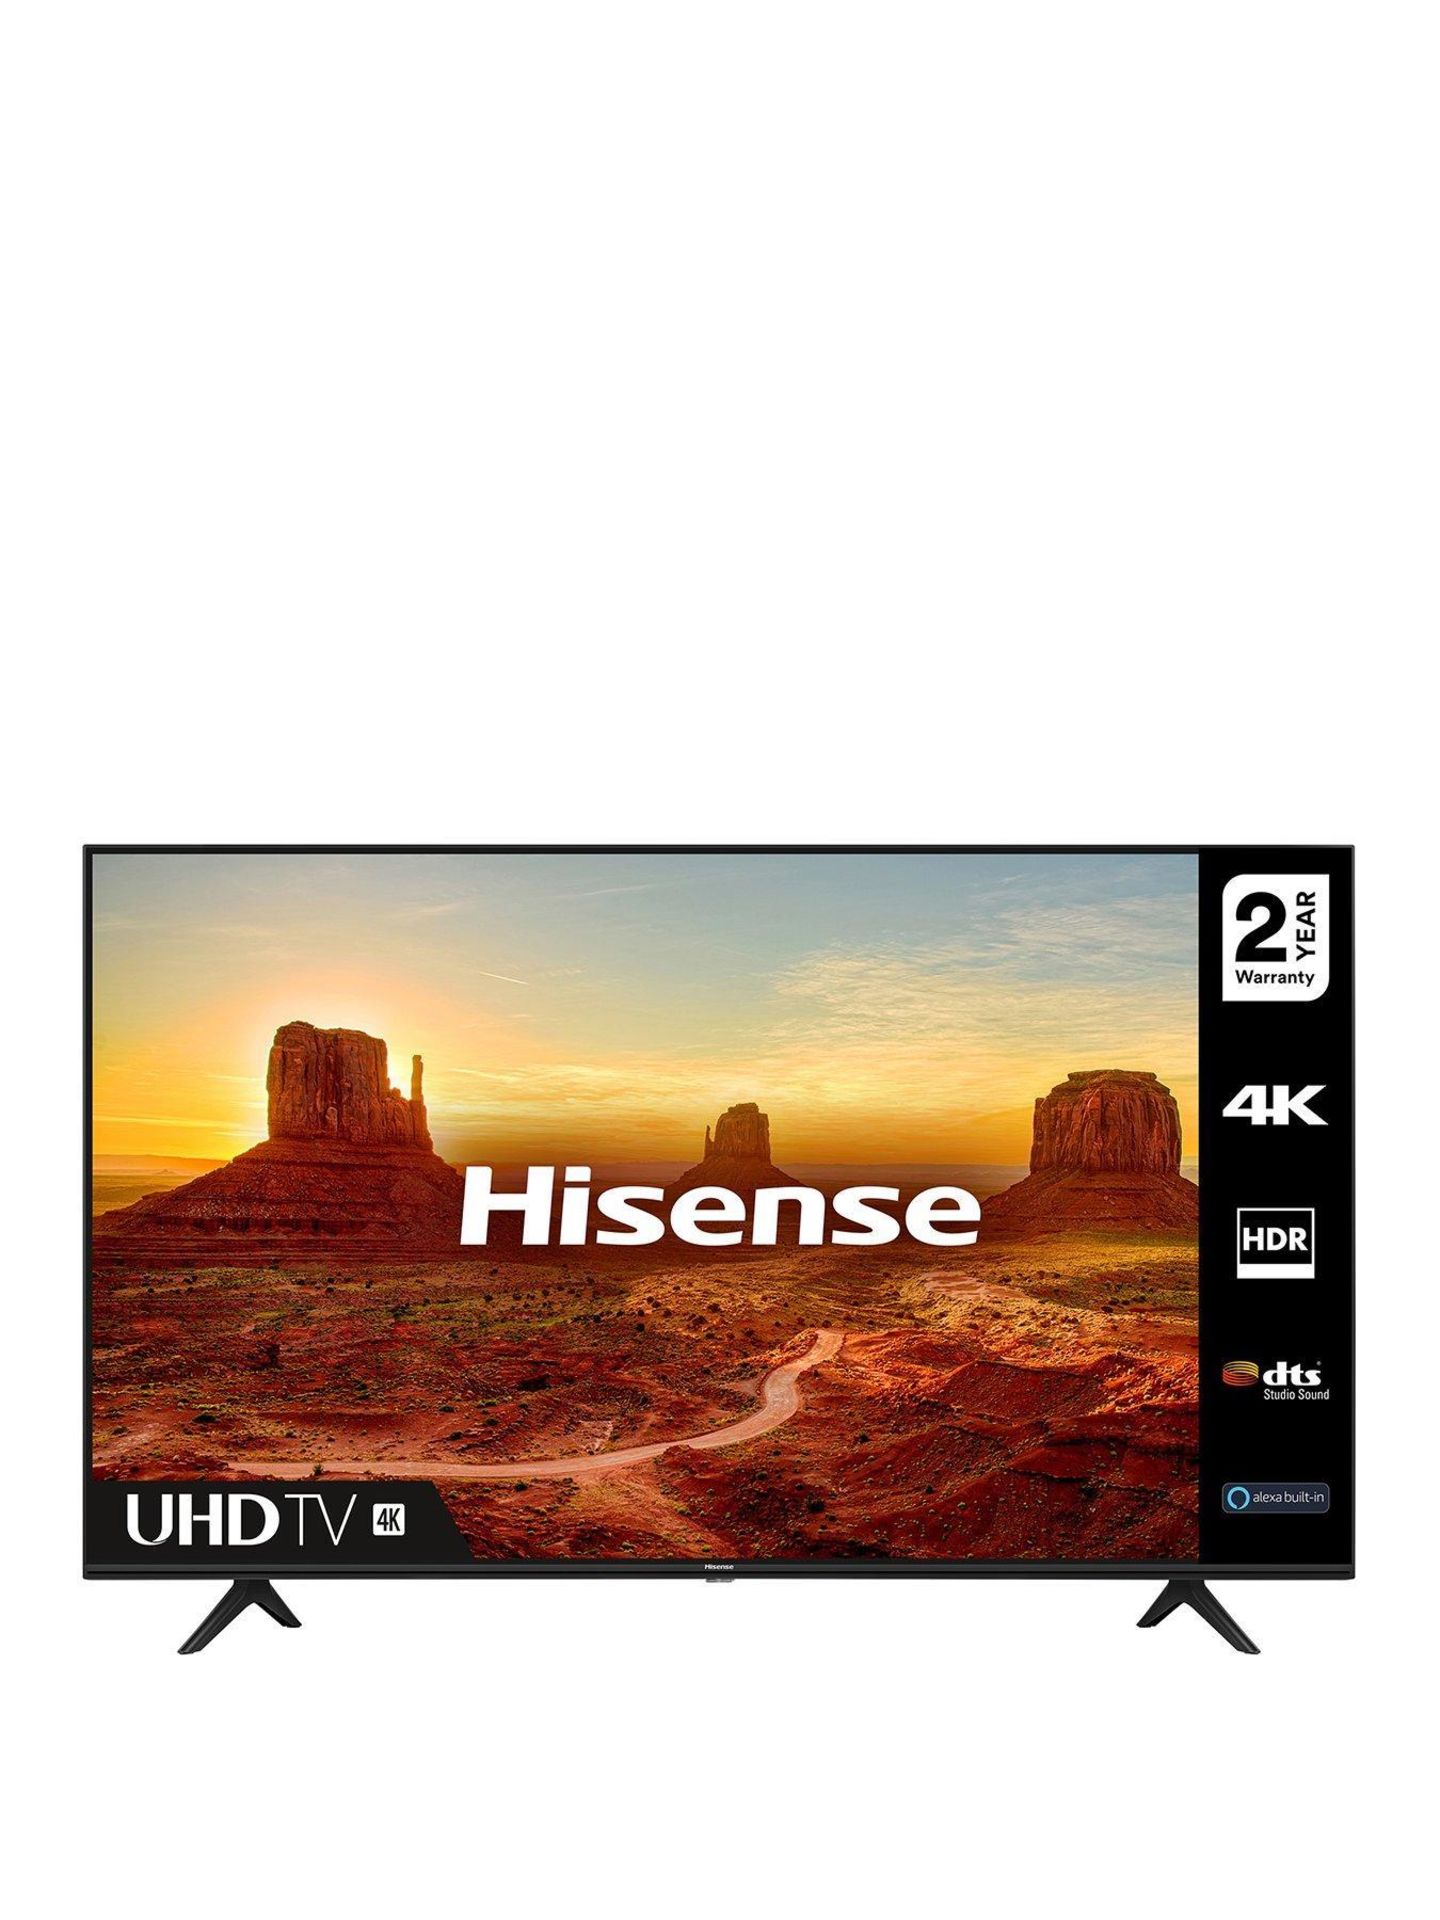 Hisense h50a7100ftuk 50 inch 4k ultra hd, hdr, freeview play smart tv 71x112x23cm rrp: £694.0 - Image 2 of 2